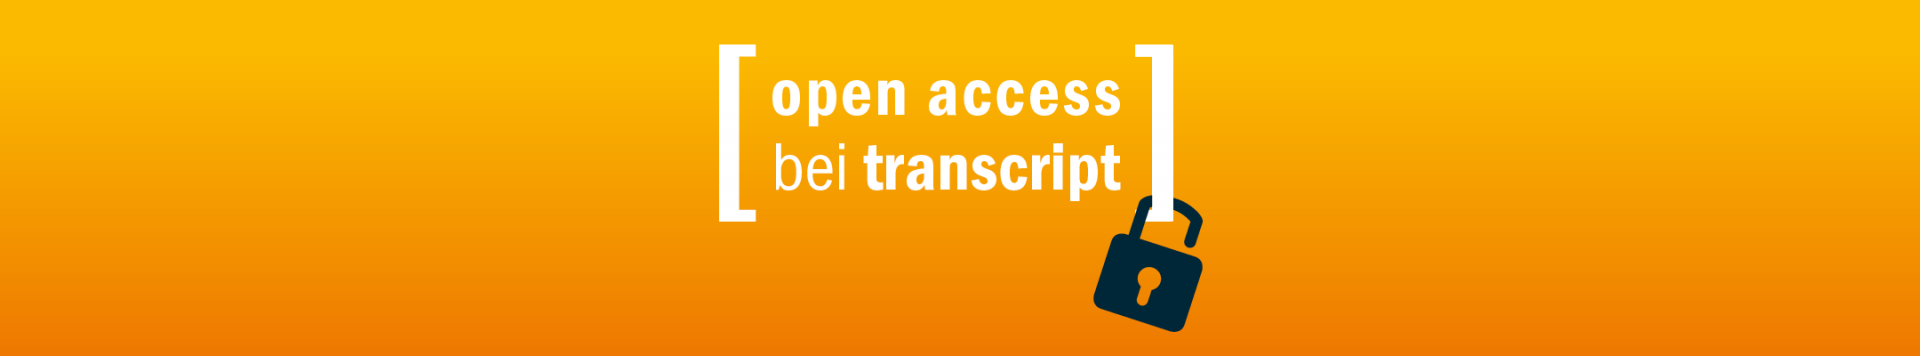 Open access at transcript publishers